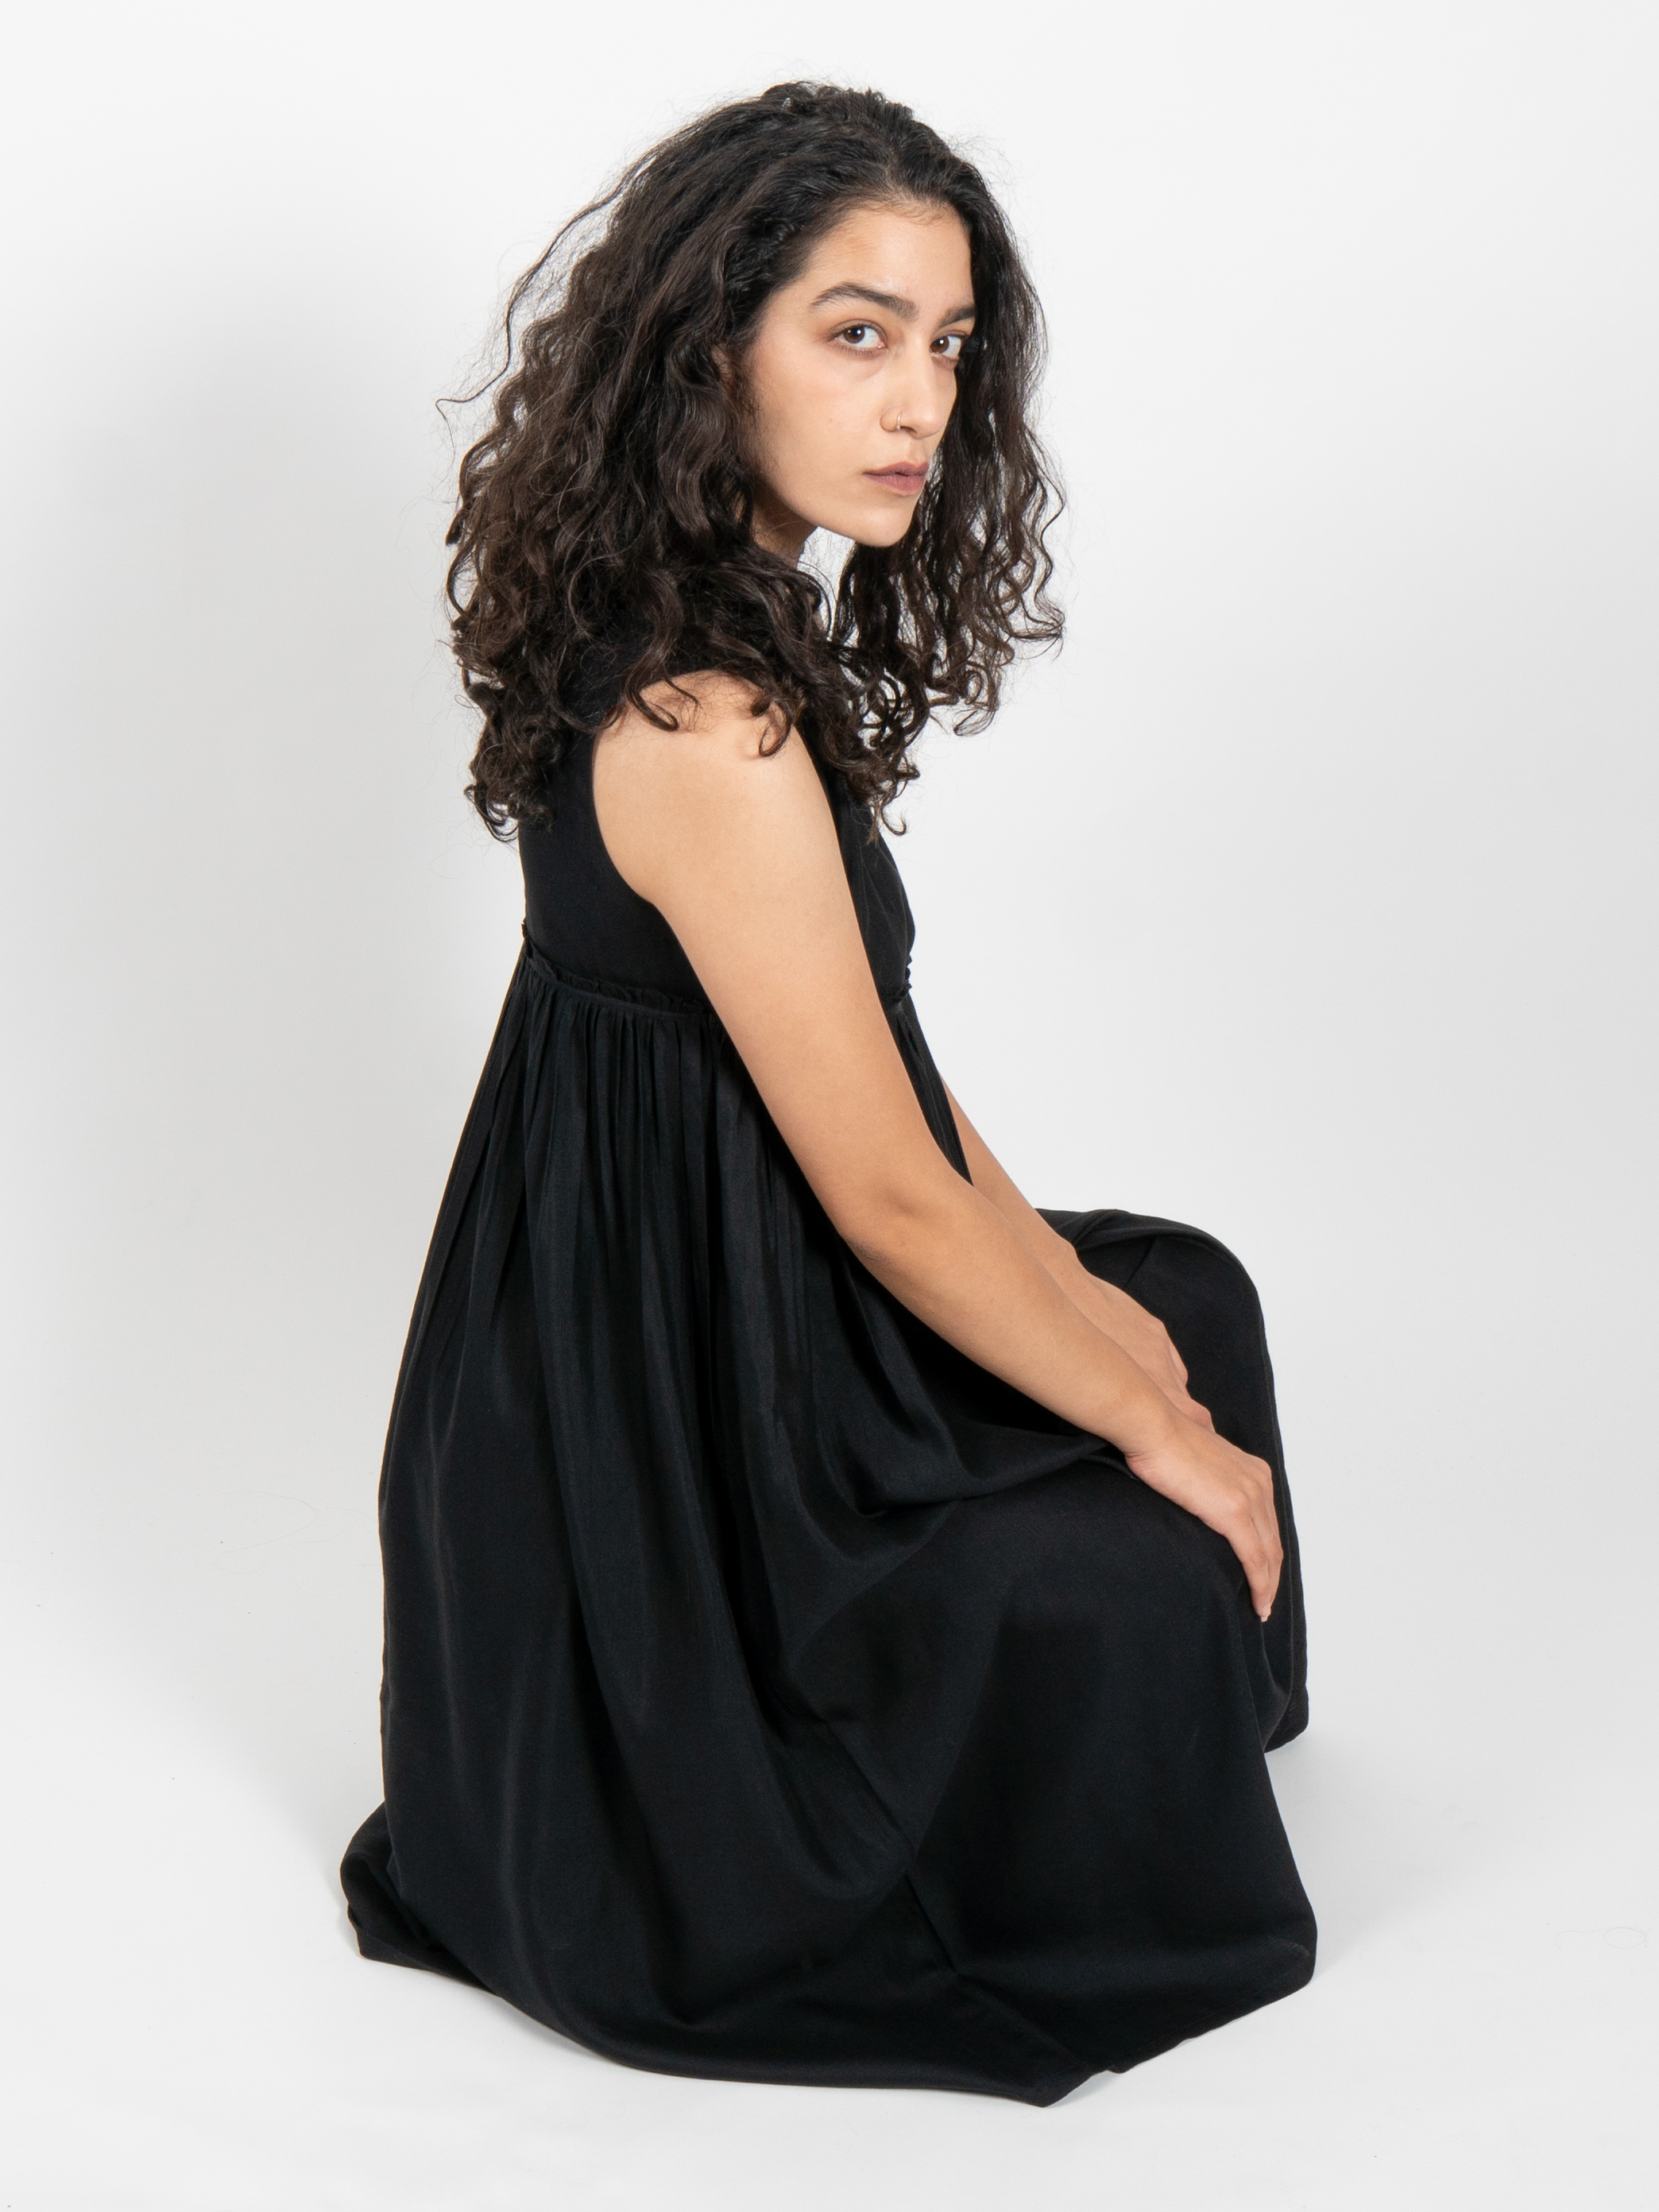 Get Black & White Satin Floral Cowl Neck Midi Dress at ₹ 3200 | LBB Shop